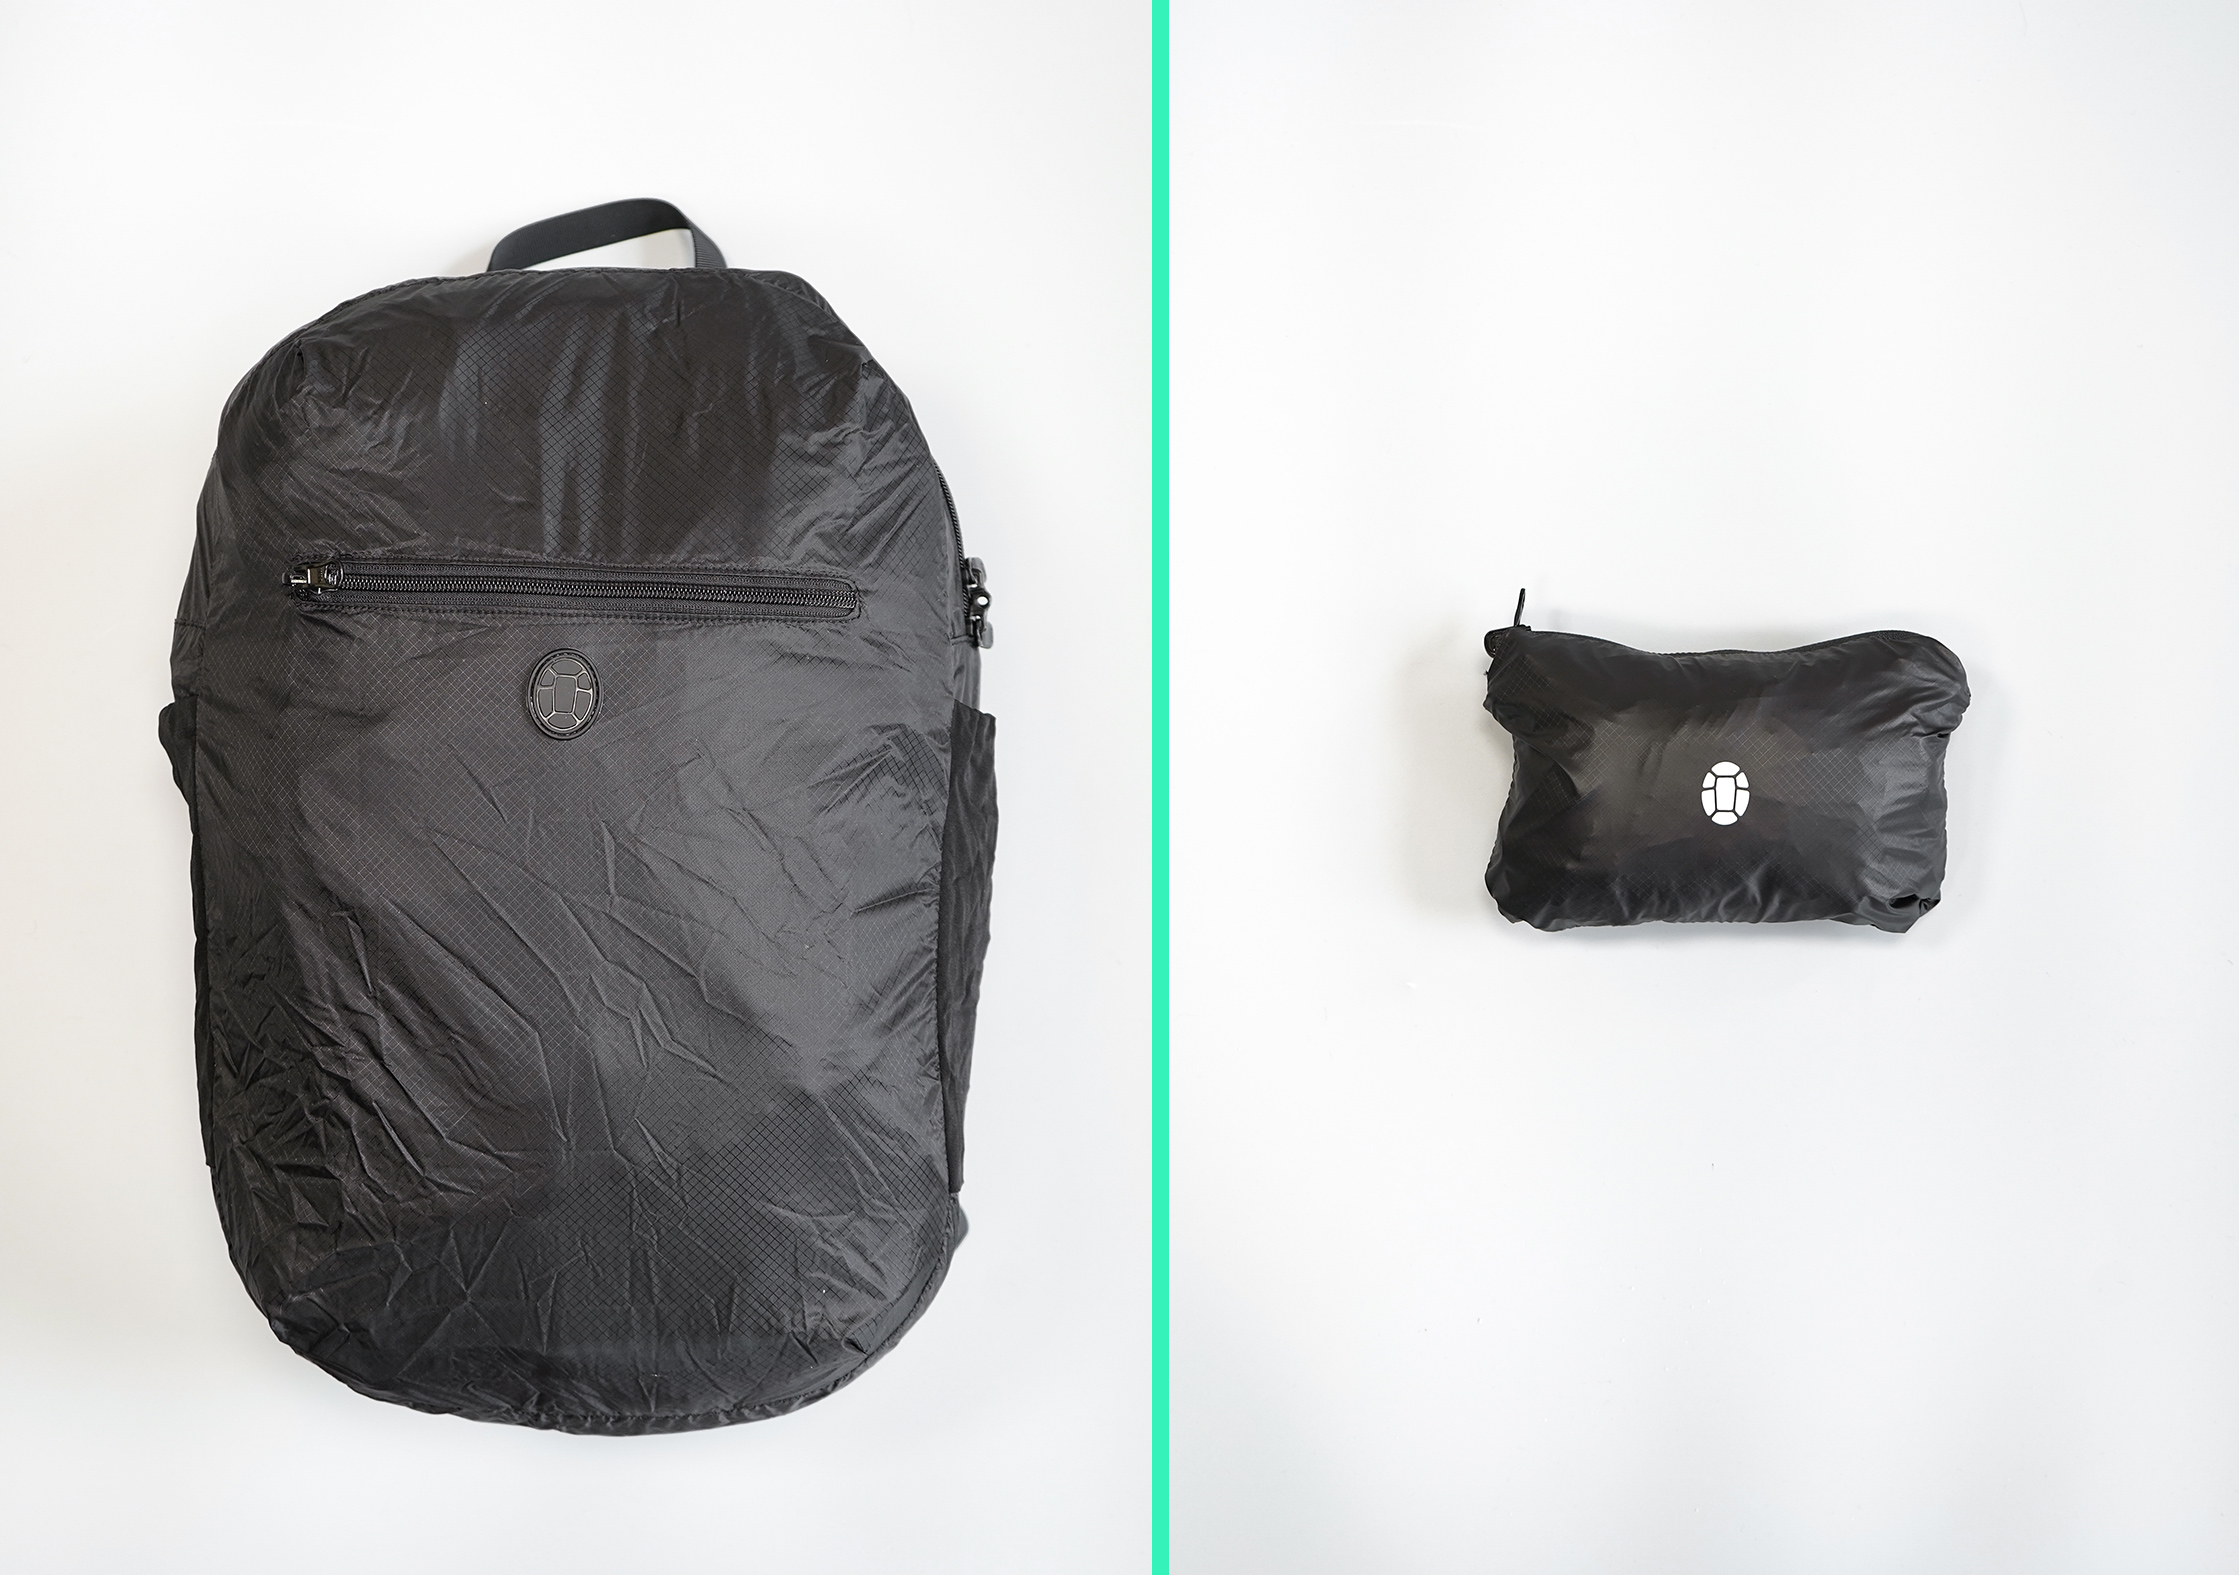 Tortuga Setout Packable Daypack Compressed Size Comparison